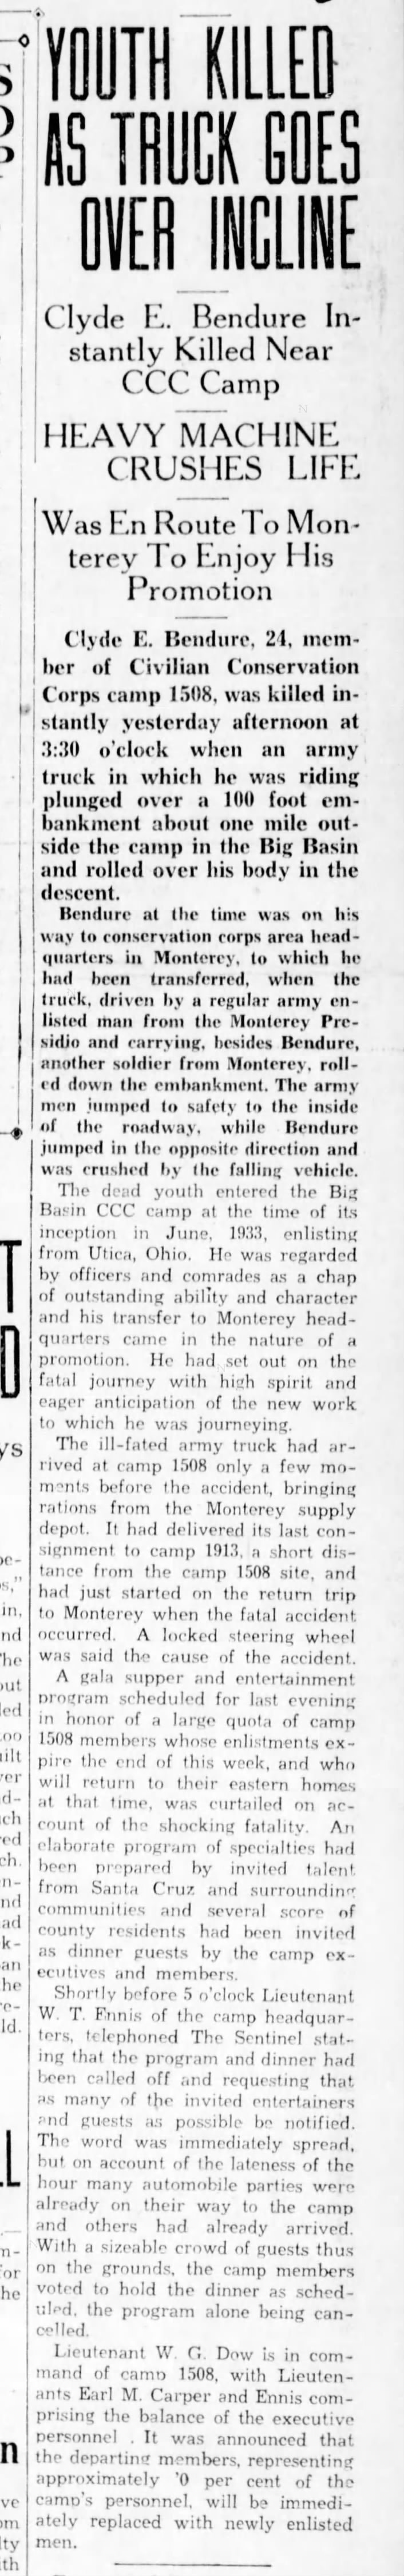 Sentinel, 20 Mar 1934, Page 1, Col 7